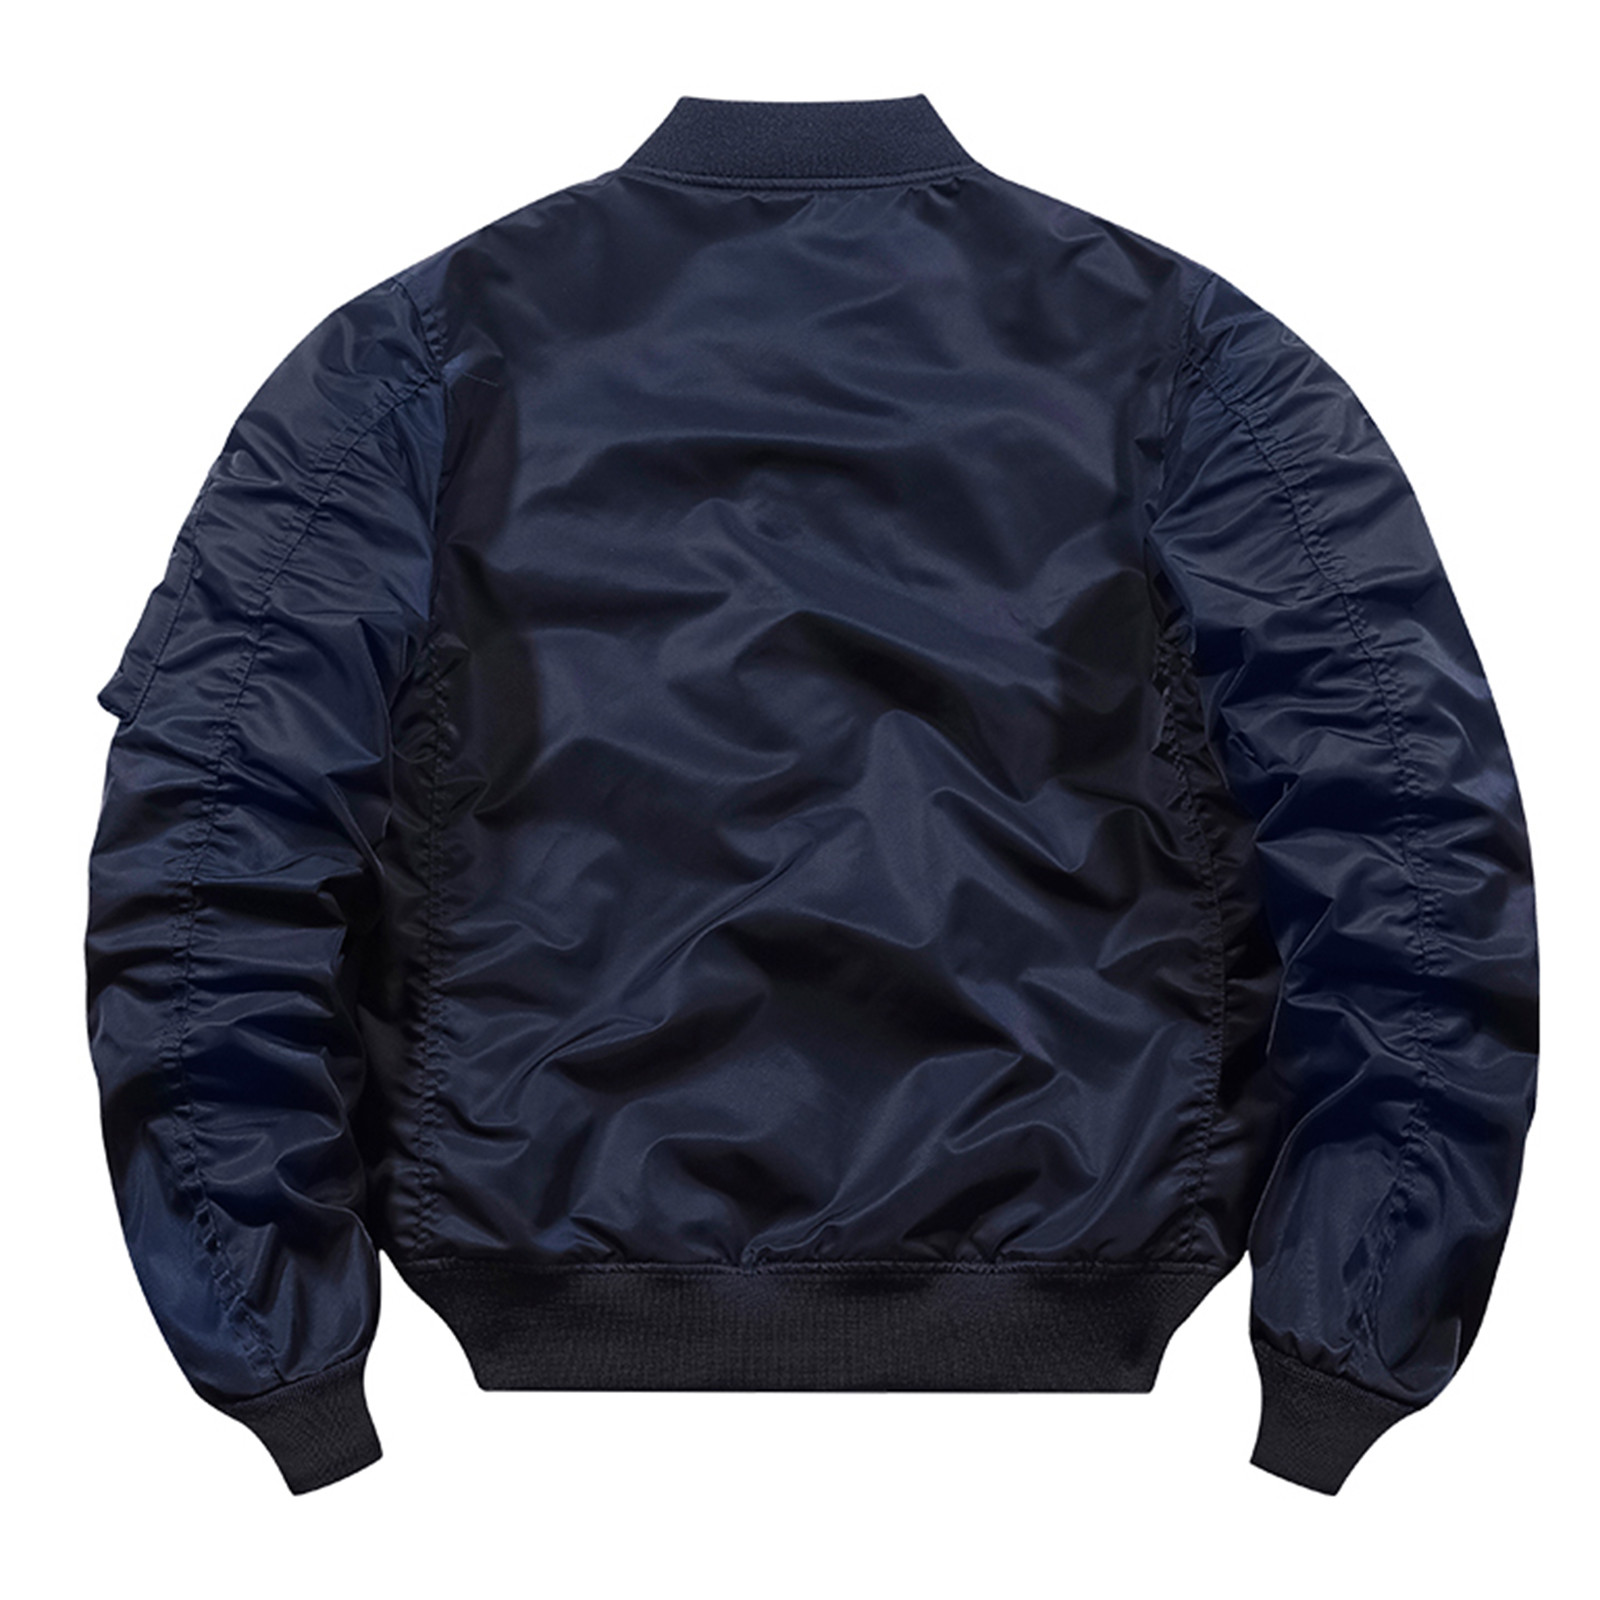 LEEy-world Mens Leather Jacket Men's Jackets Windbreaker Bomber Jackets Pockets Lightweight Spring Fall Varsity Baseball Jacket Blue,M - image 1 of 4